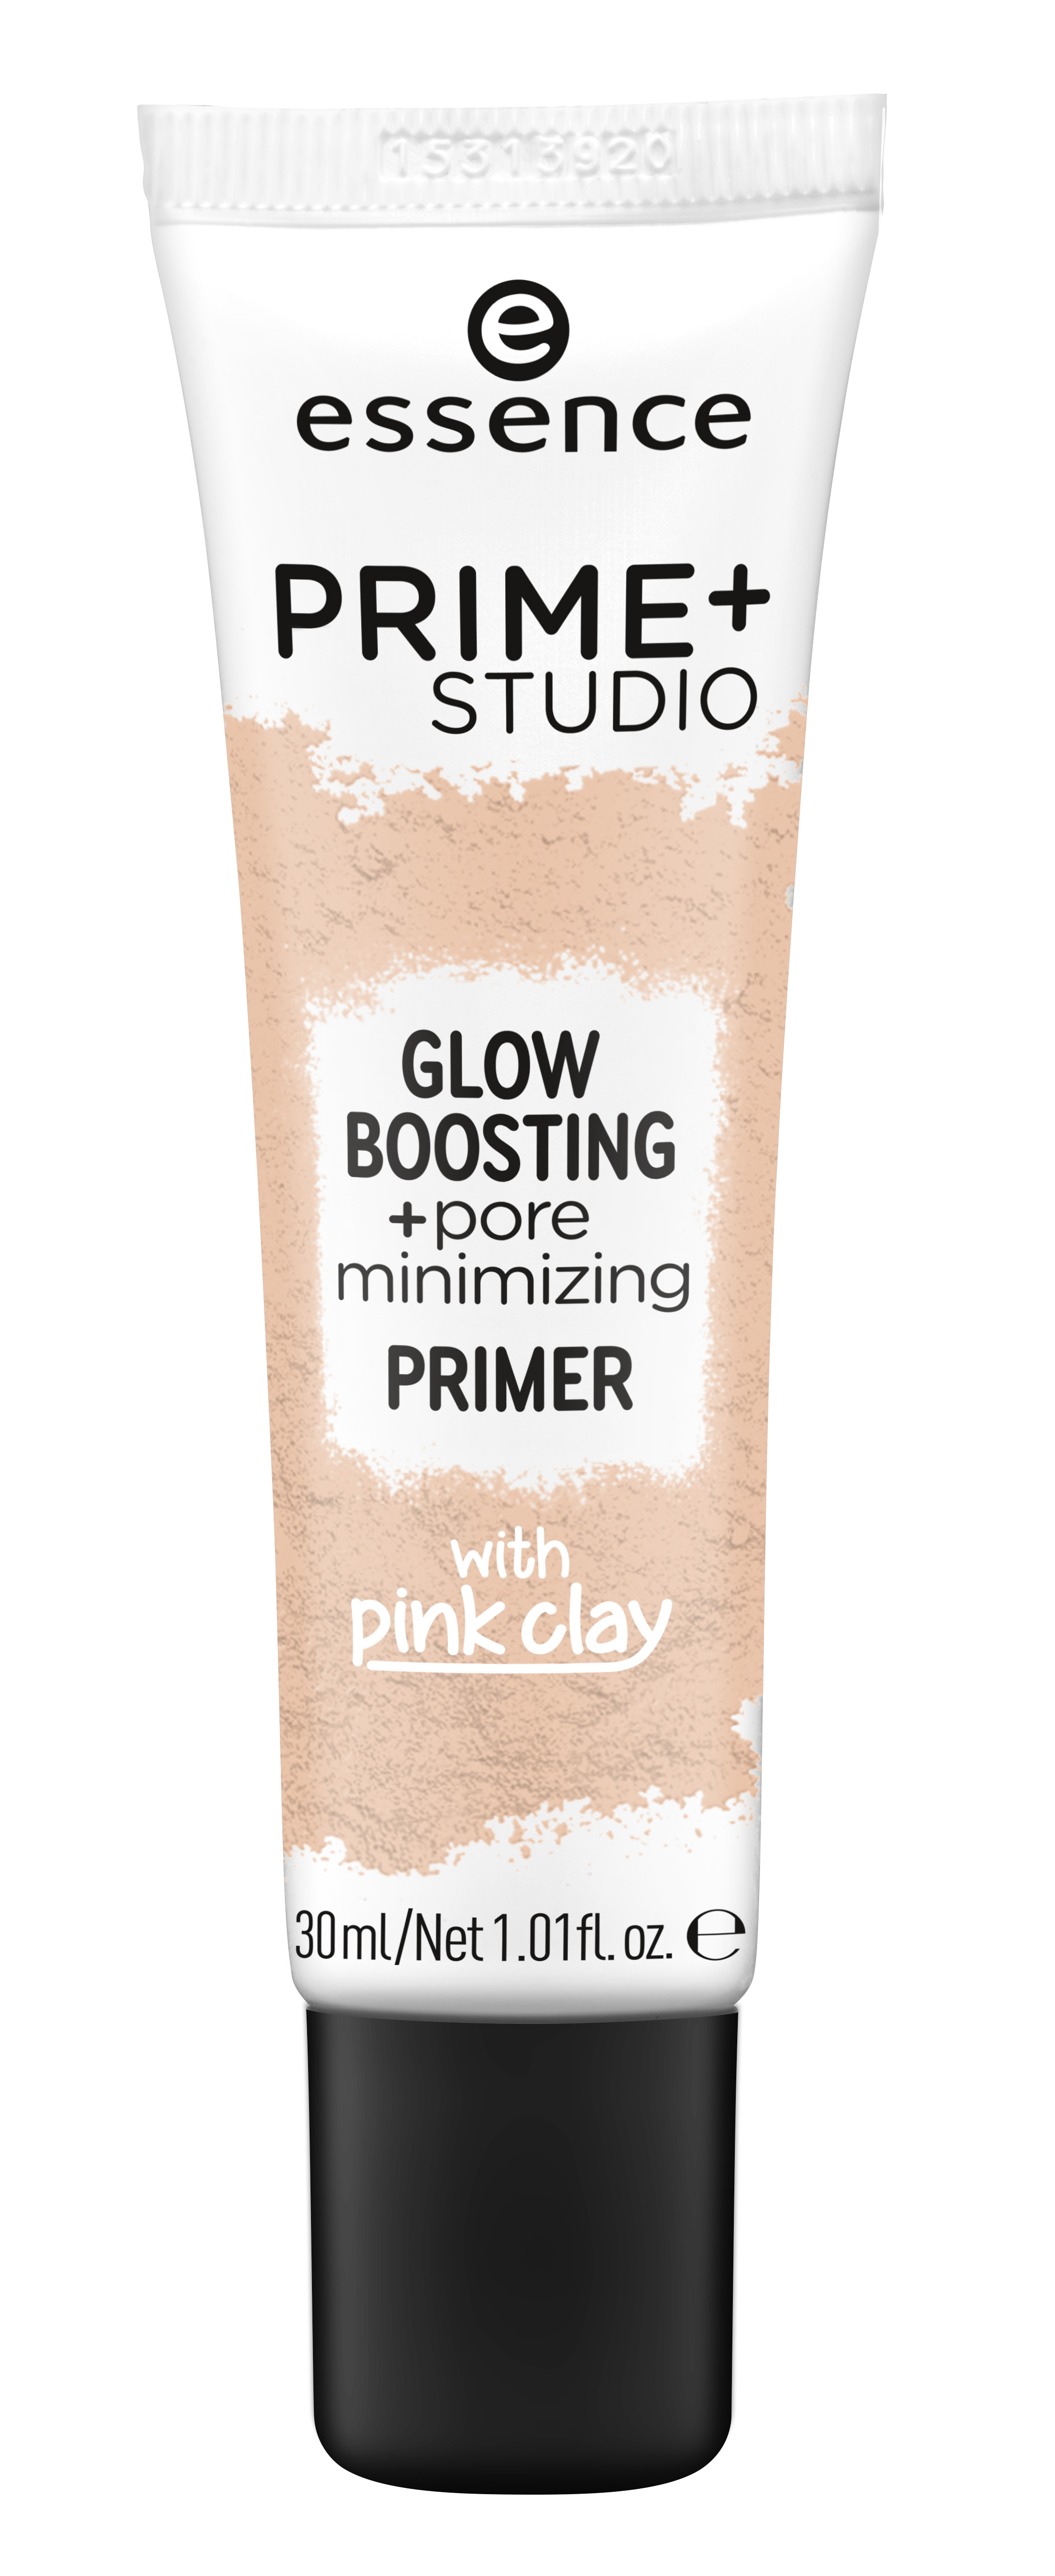 essence prime+ studio glow boosting + pore minimizing primer